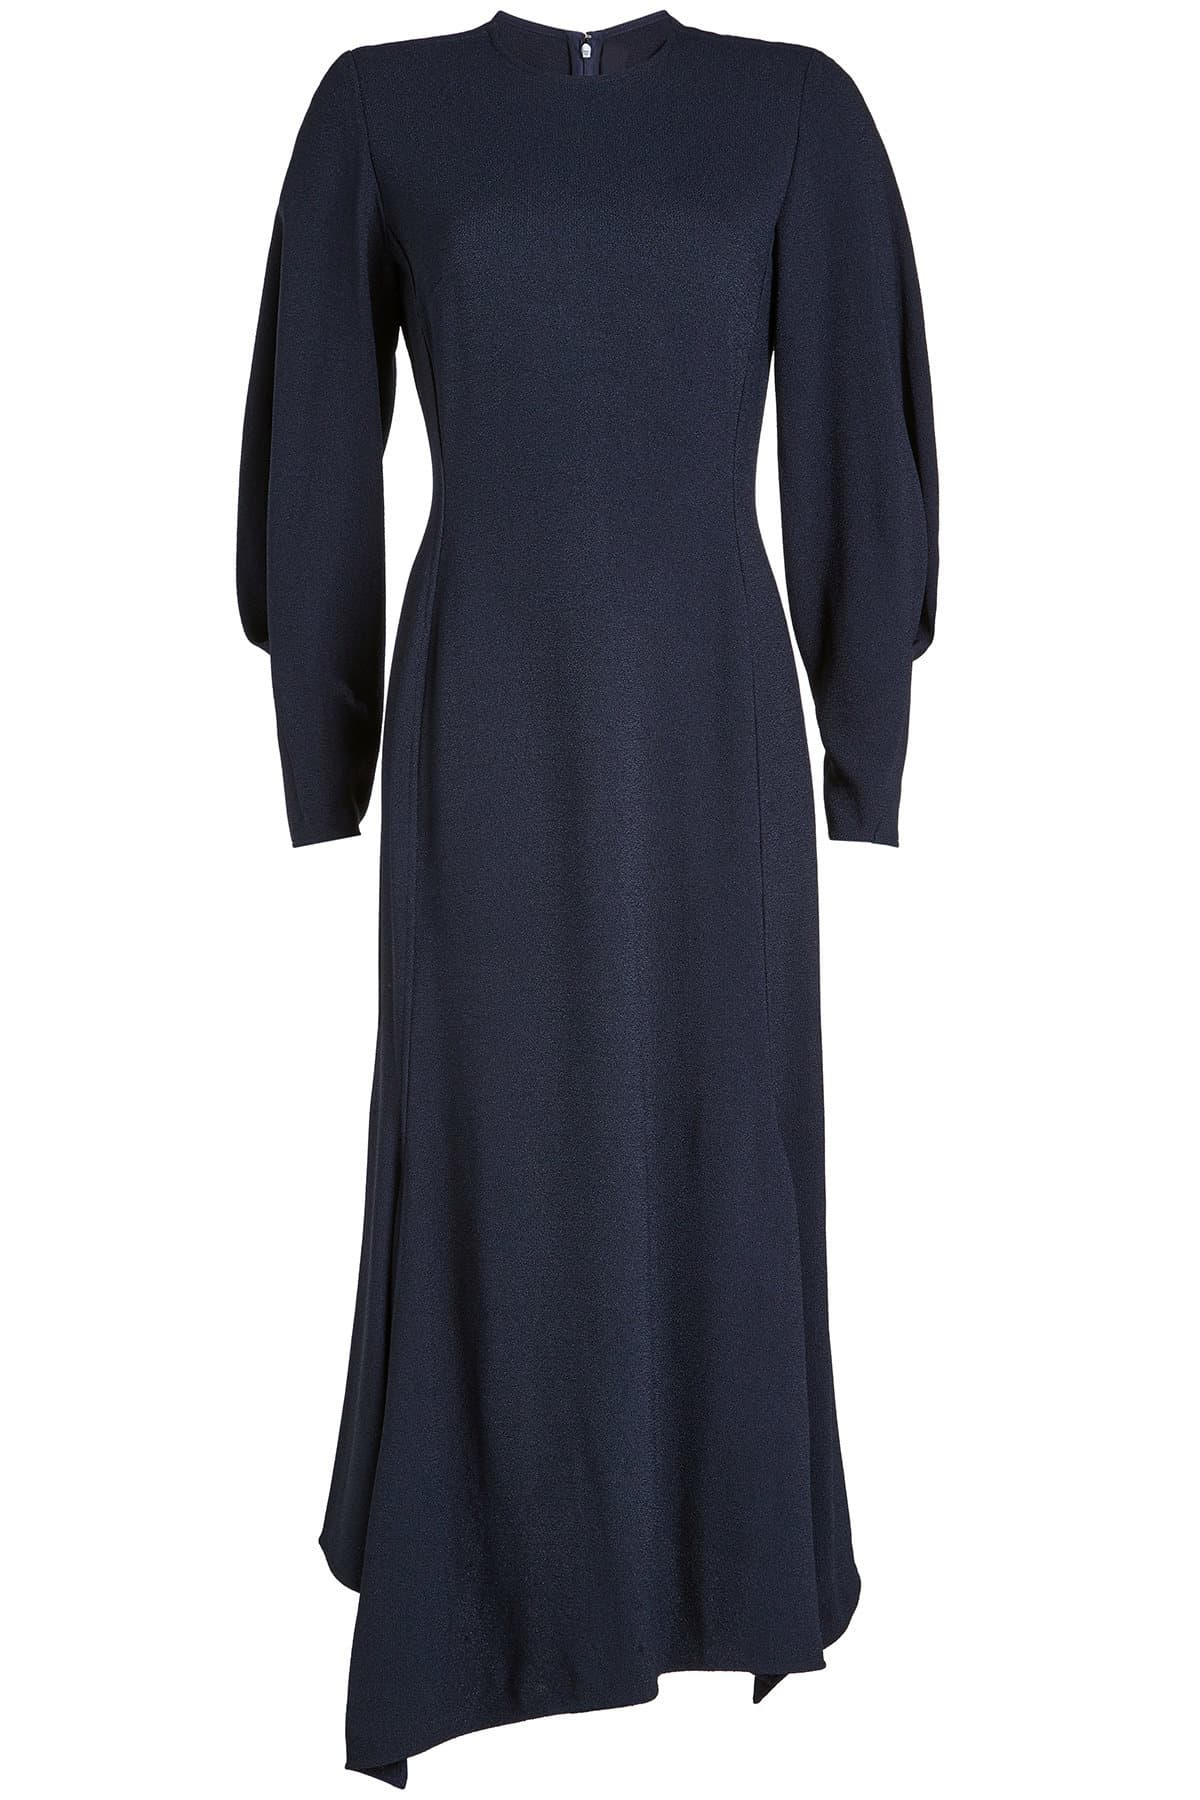 Victoria Beckham - Draped Sleeve Asymmetric Midi Dress